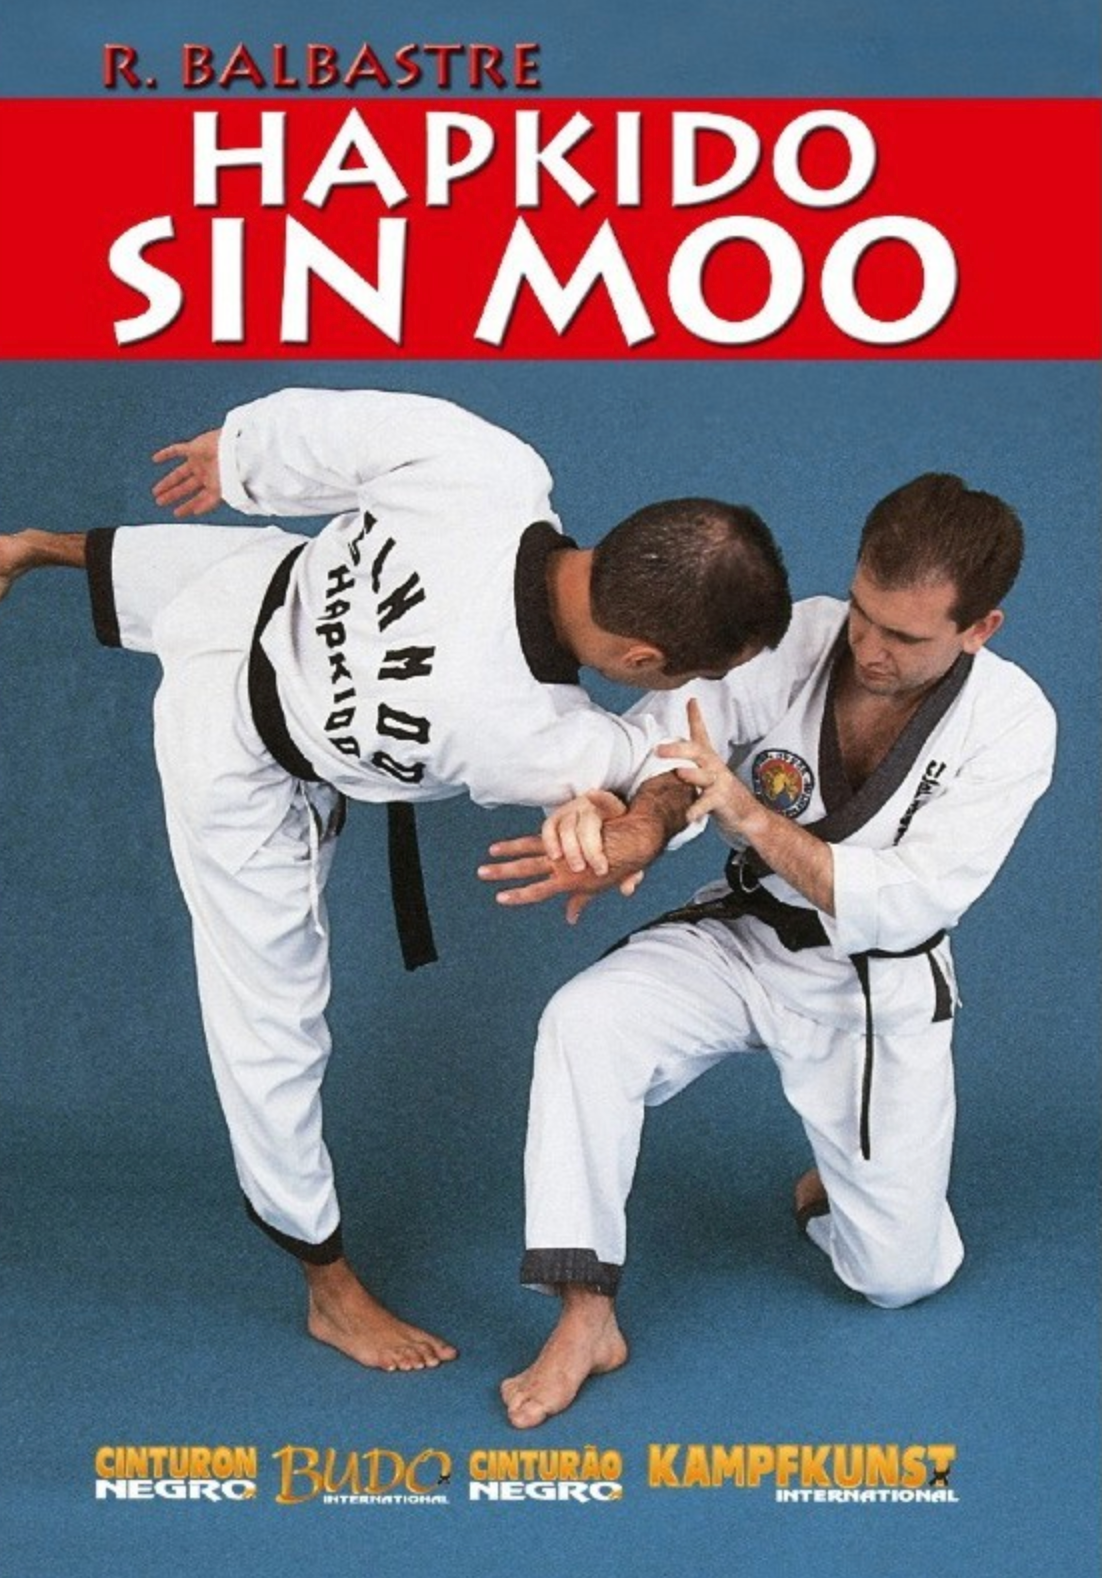 Sin Moo Hapkido DVD by R Balbastre - Budovideos Inc